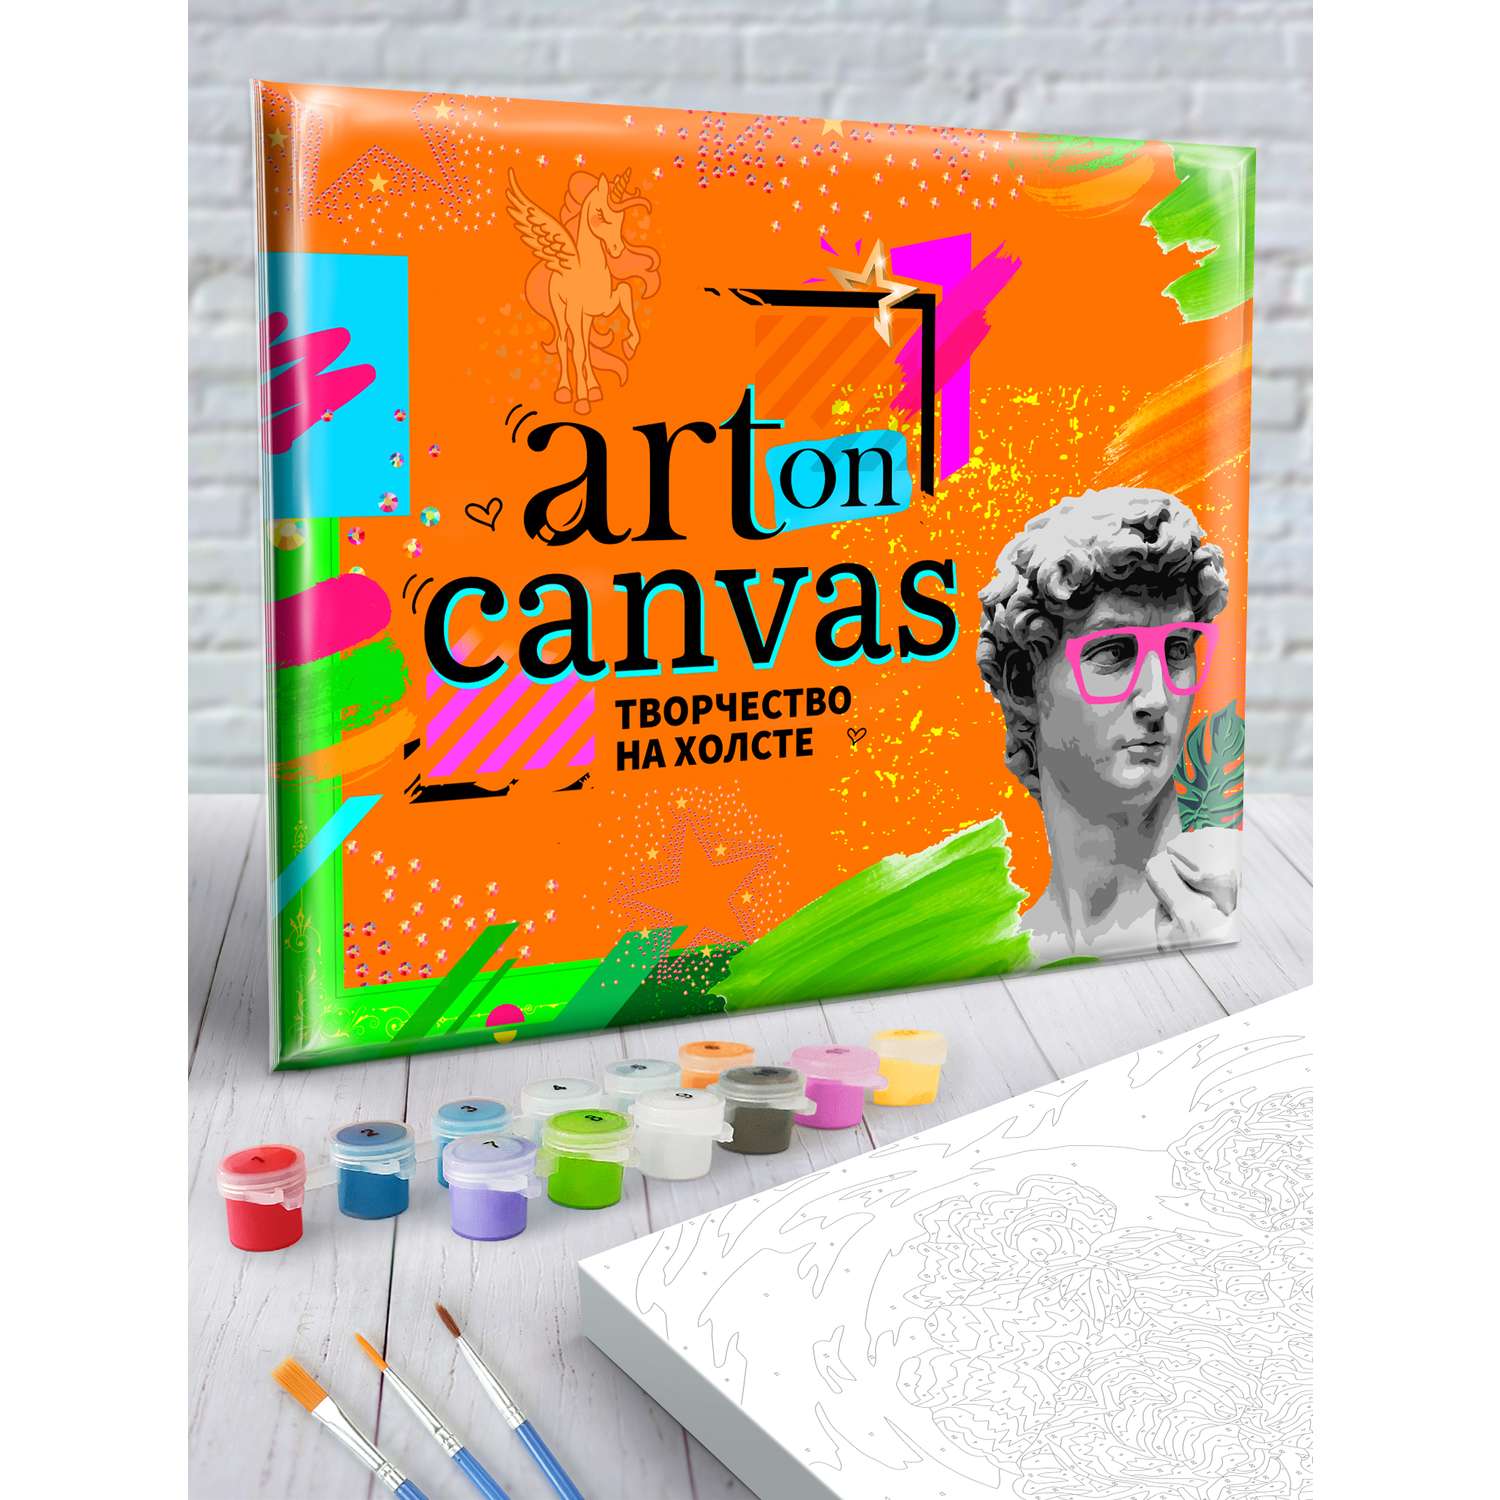 Картина по номерам Art on Canvas Арт дедпул холст на подрамнике 40х50 см - фото 6